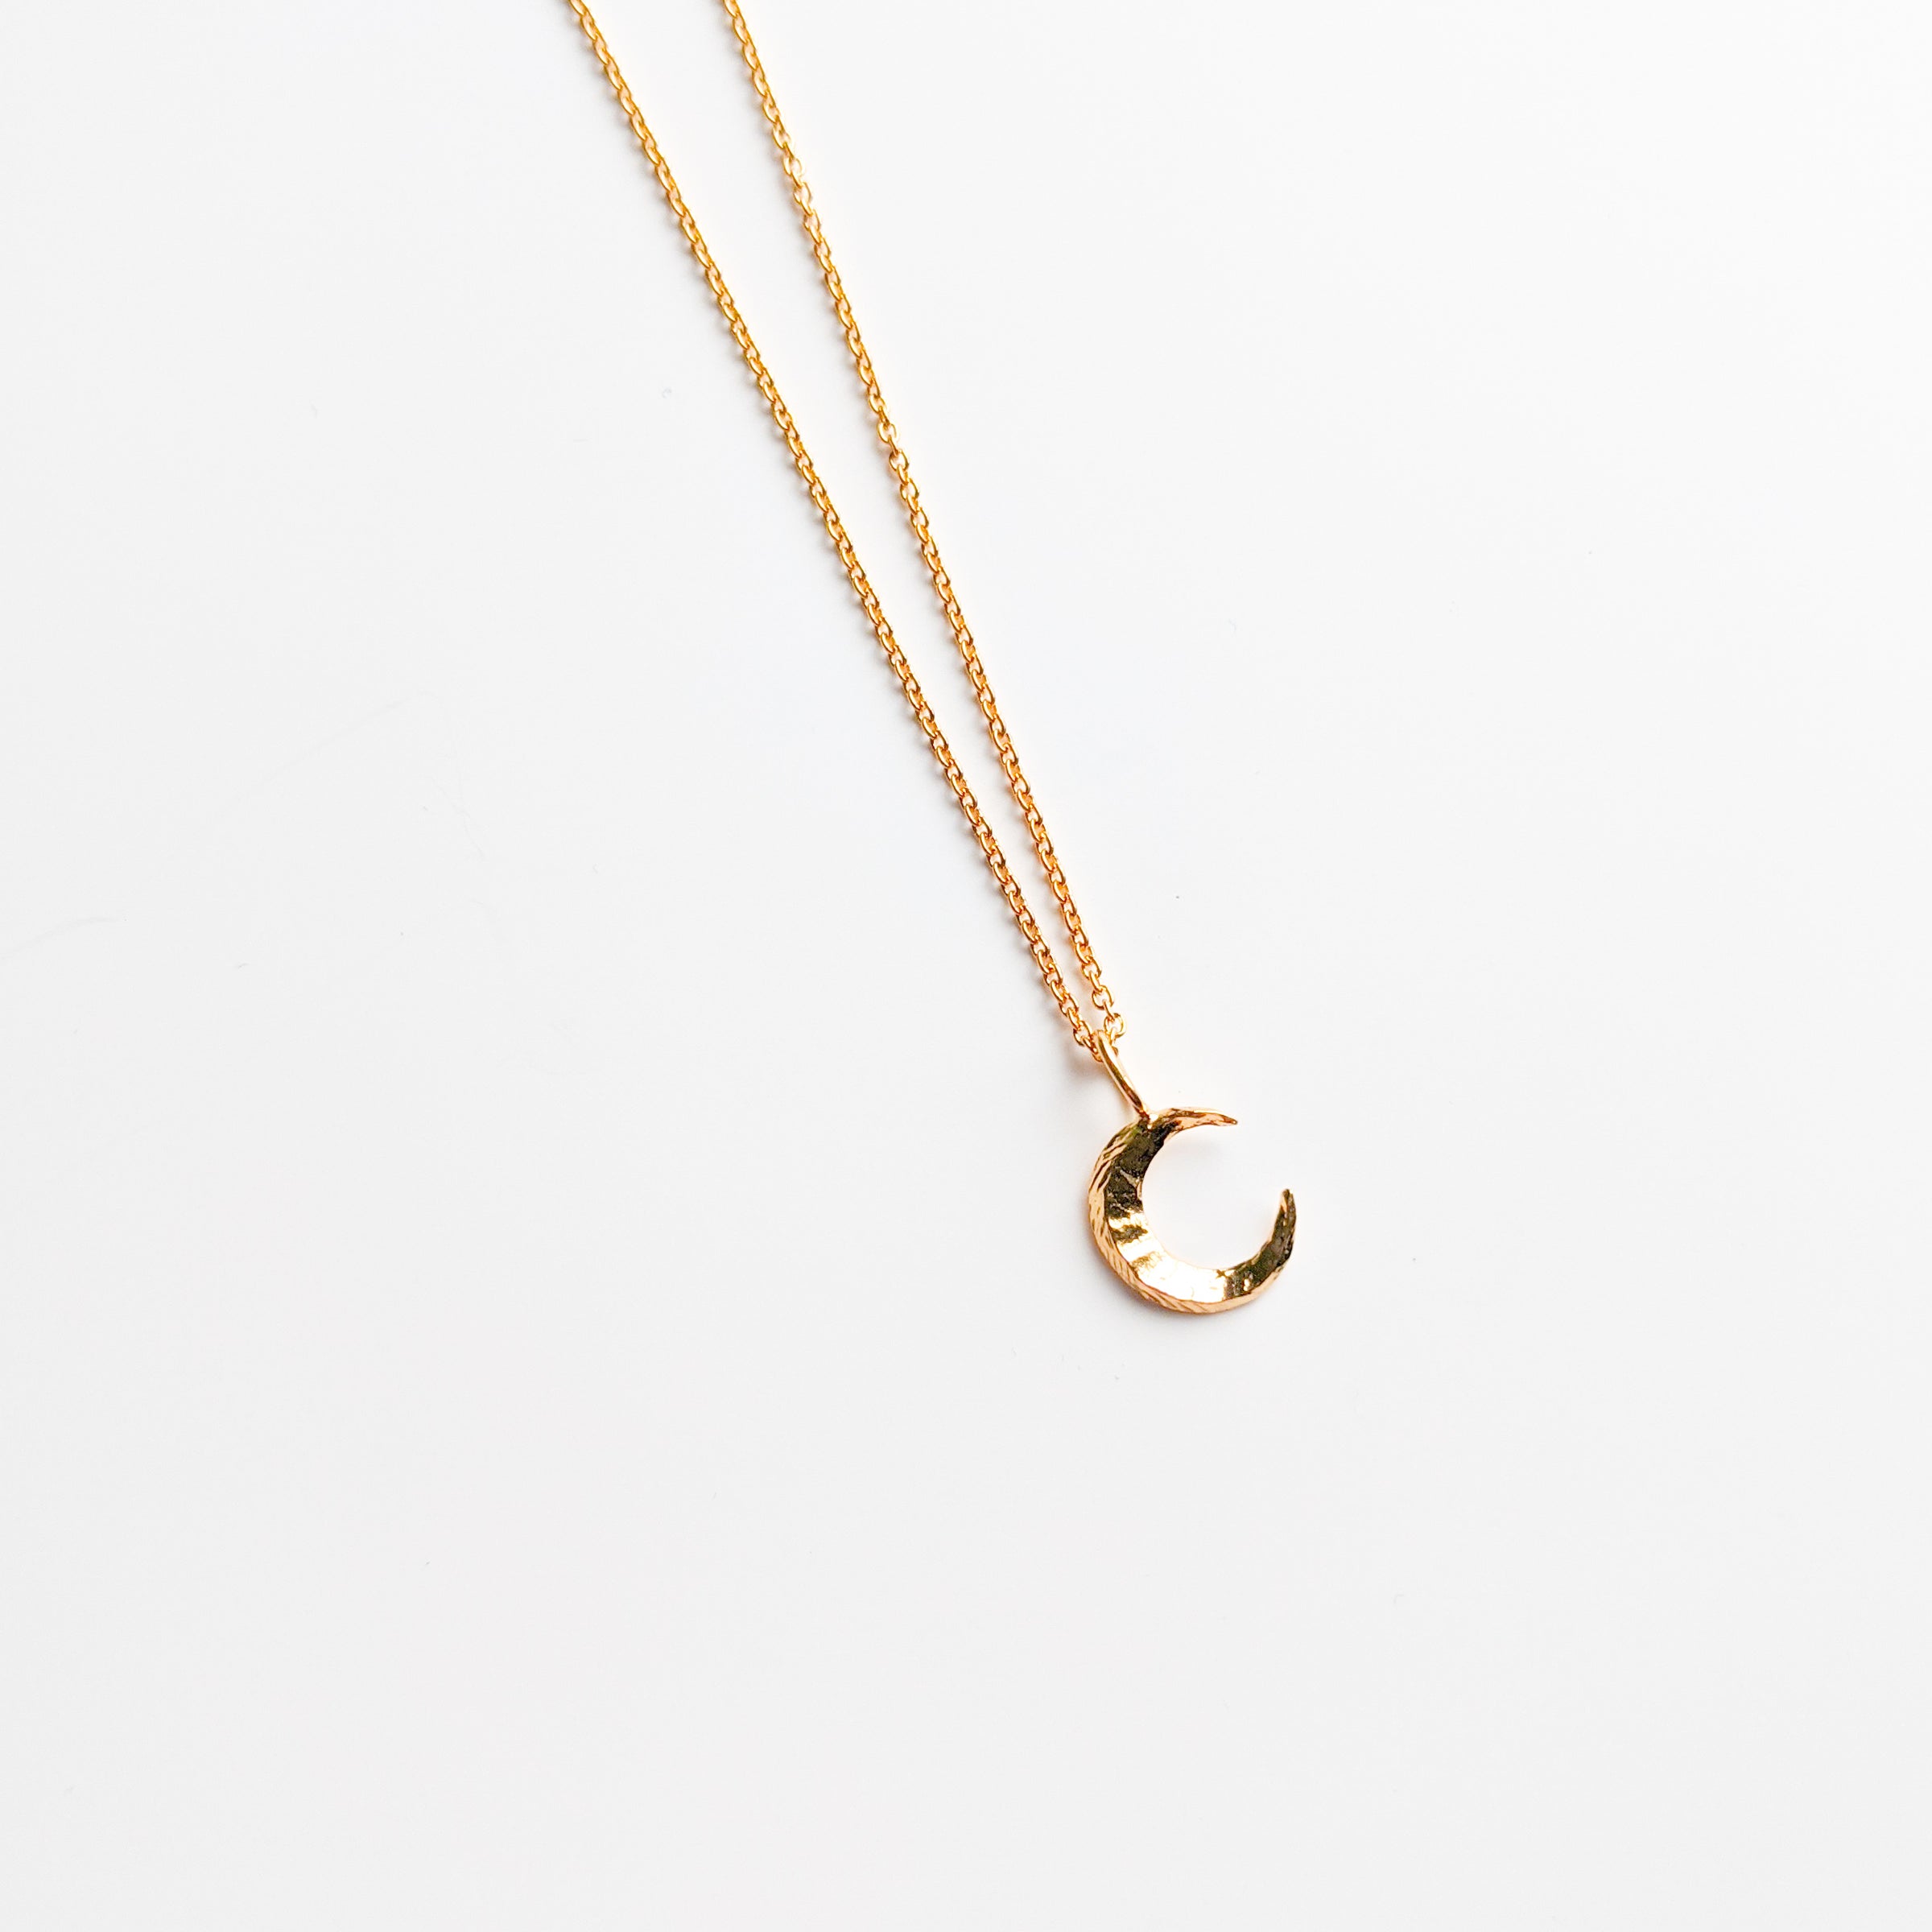 Half Moon necklace - KSP Jewelry